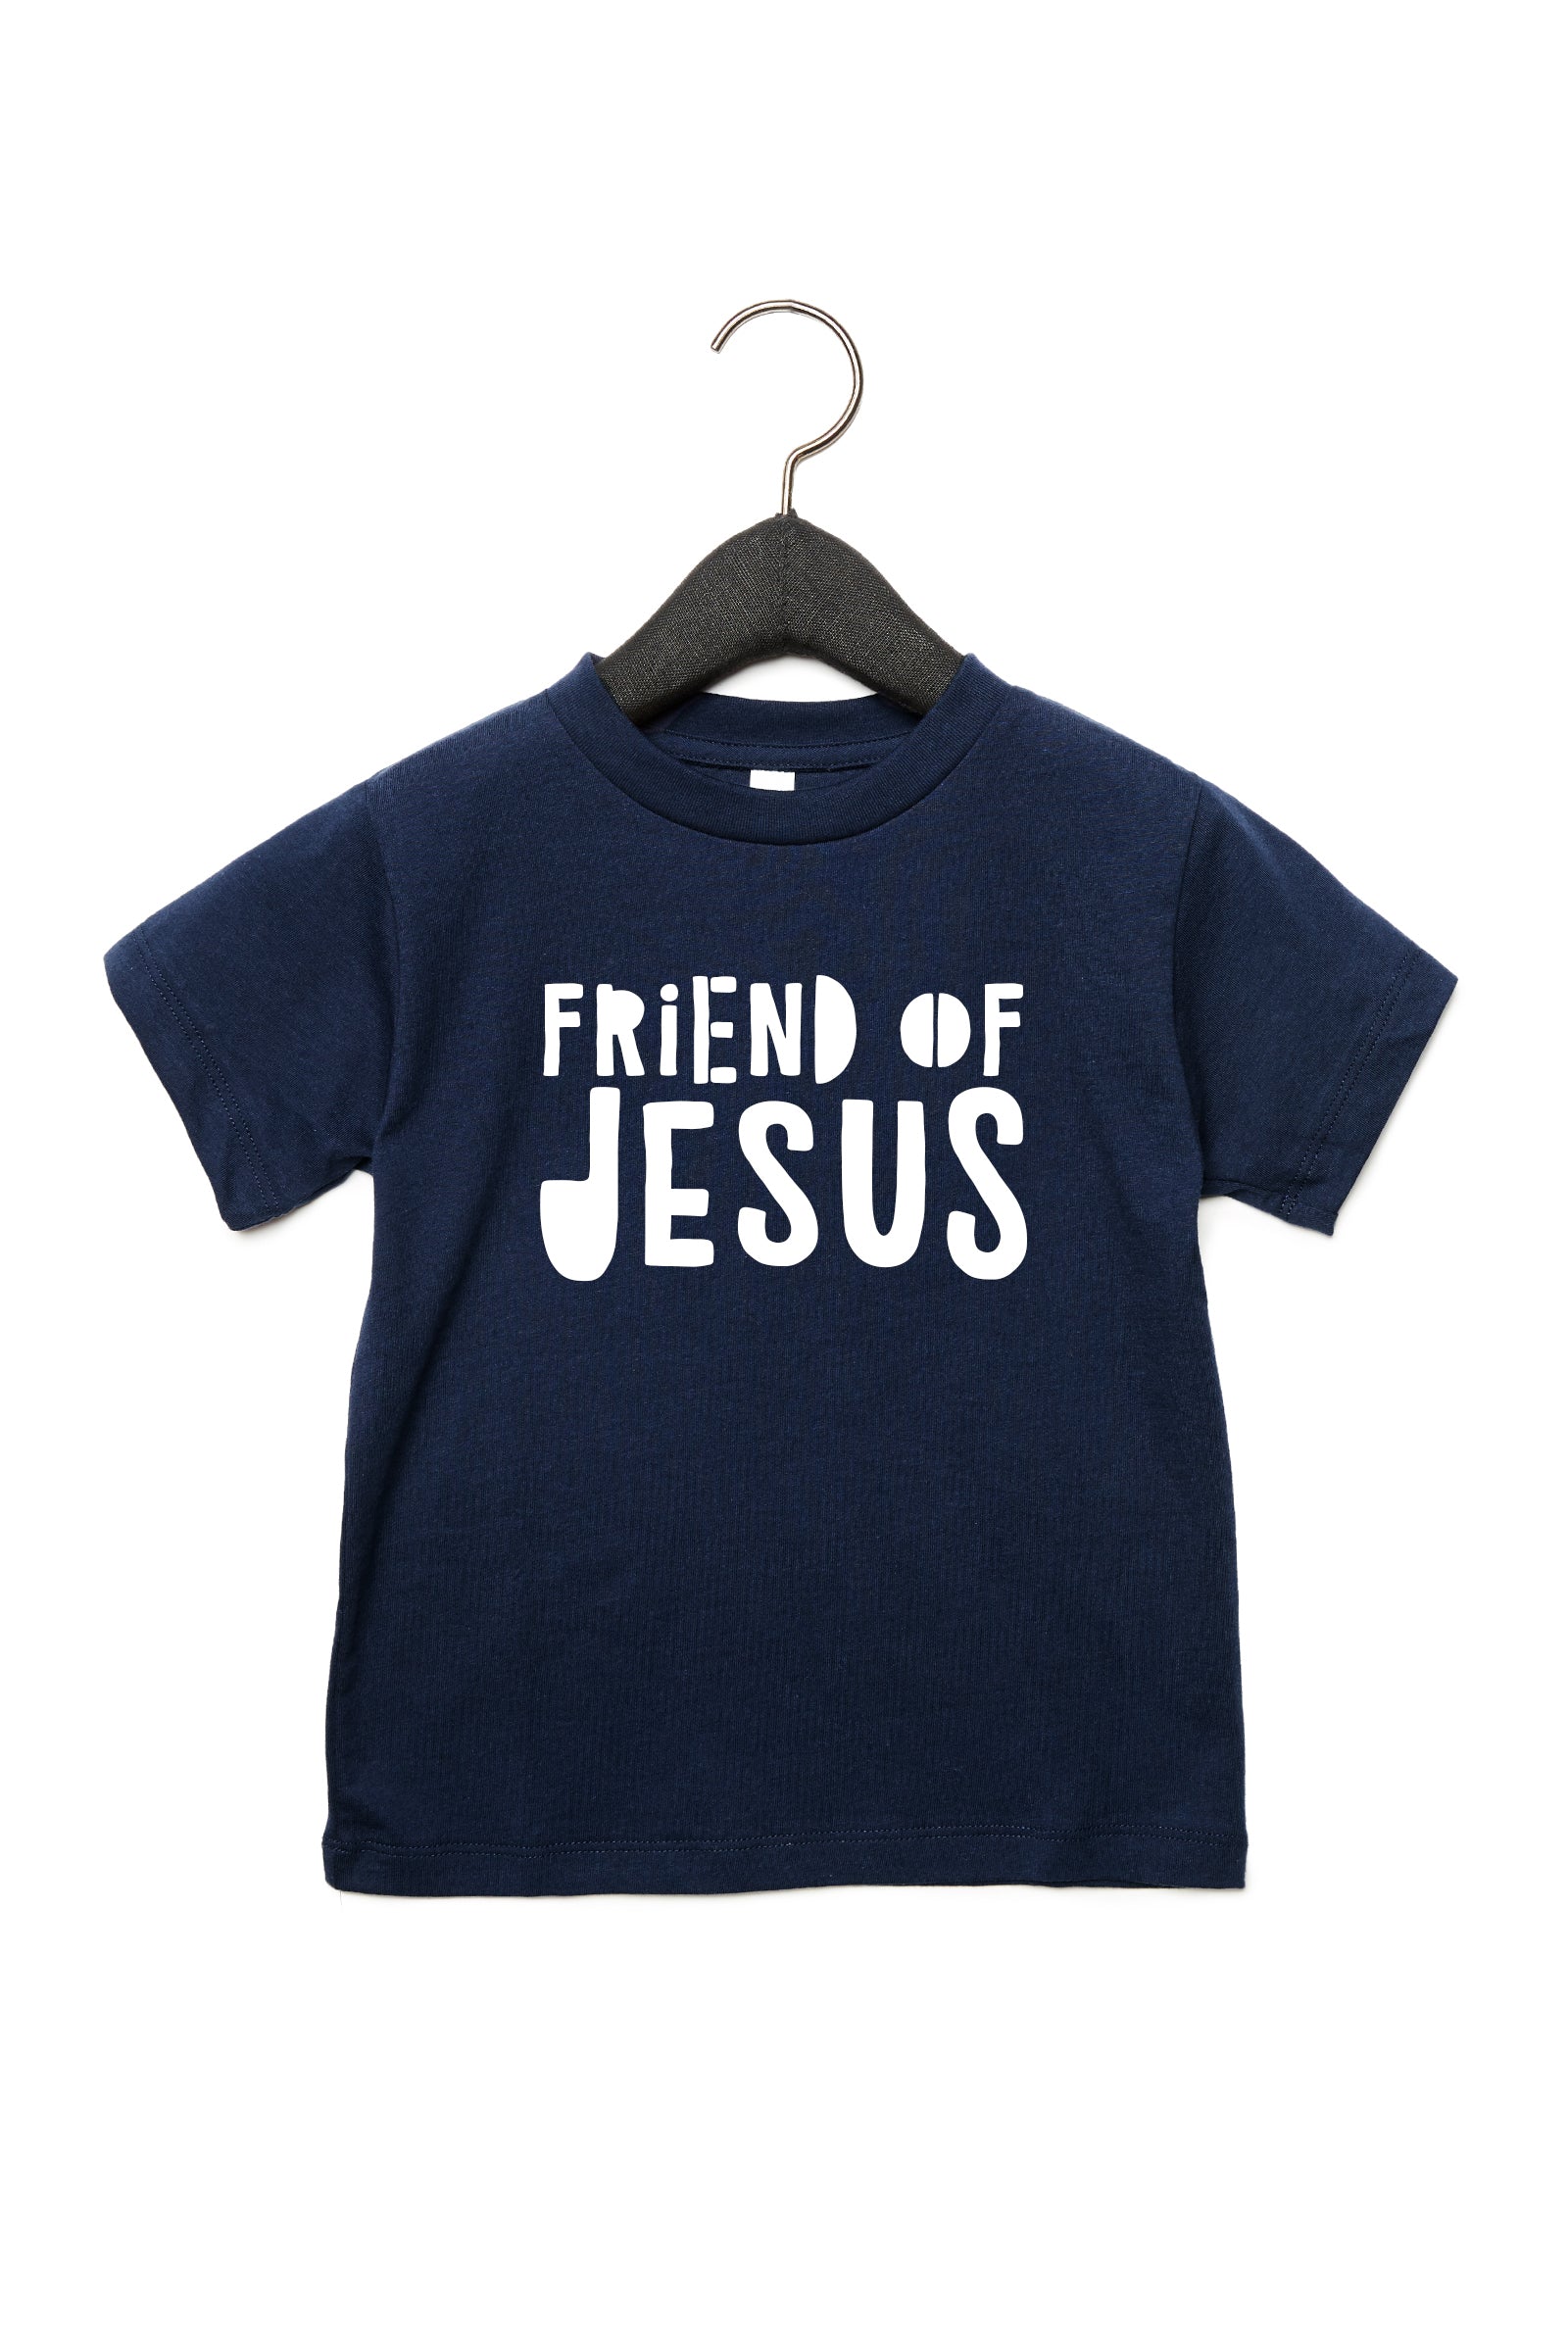 (PRE-ORDER) Friend of Jesus™️ Toddler T-Shirt | Navy